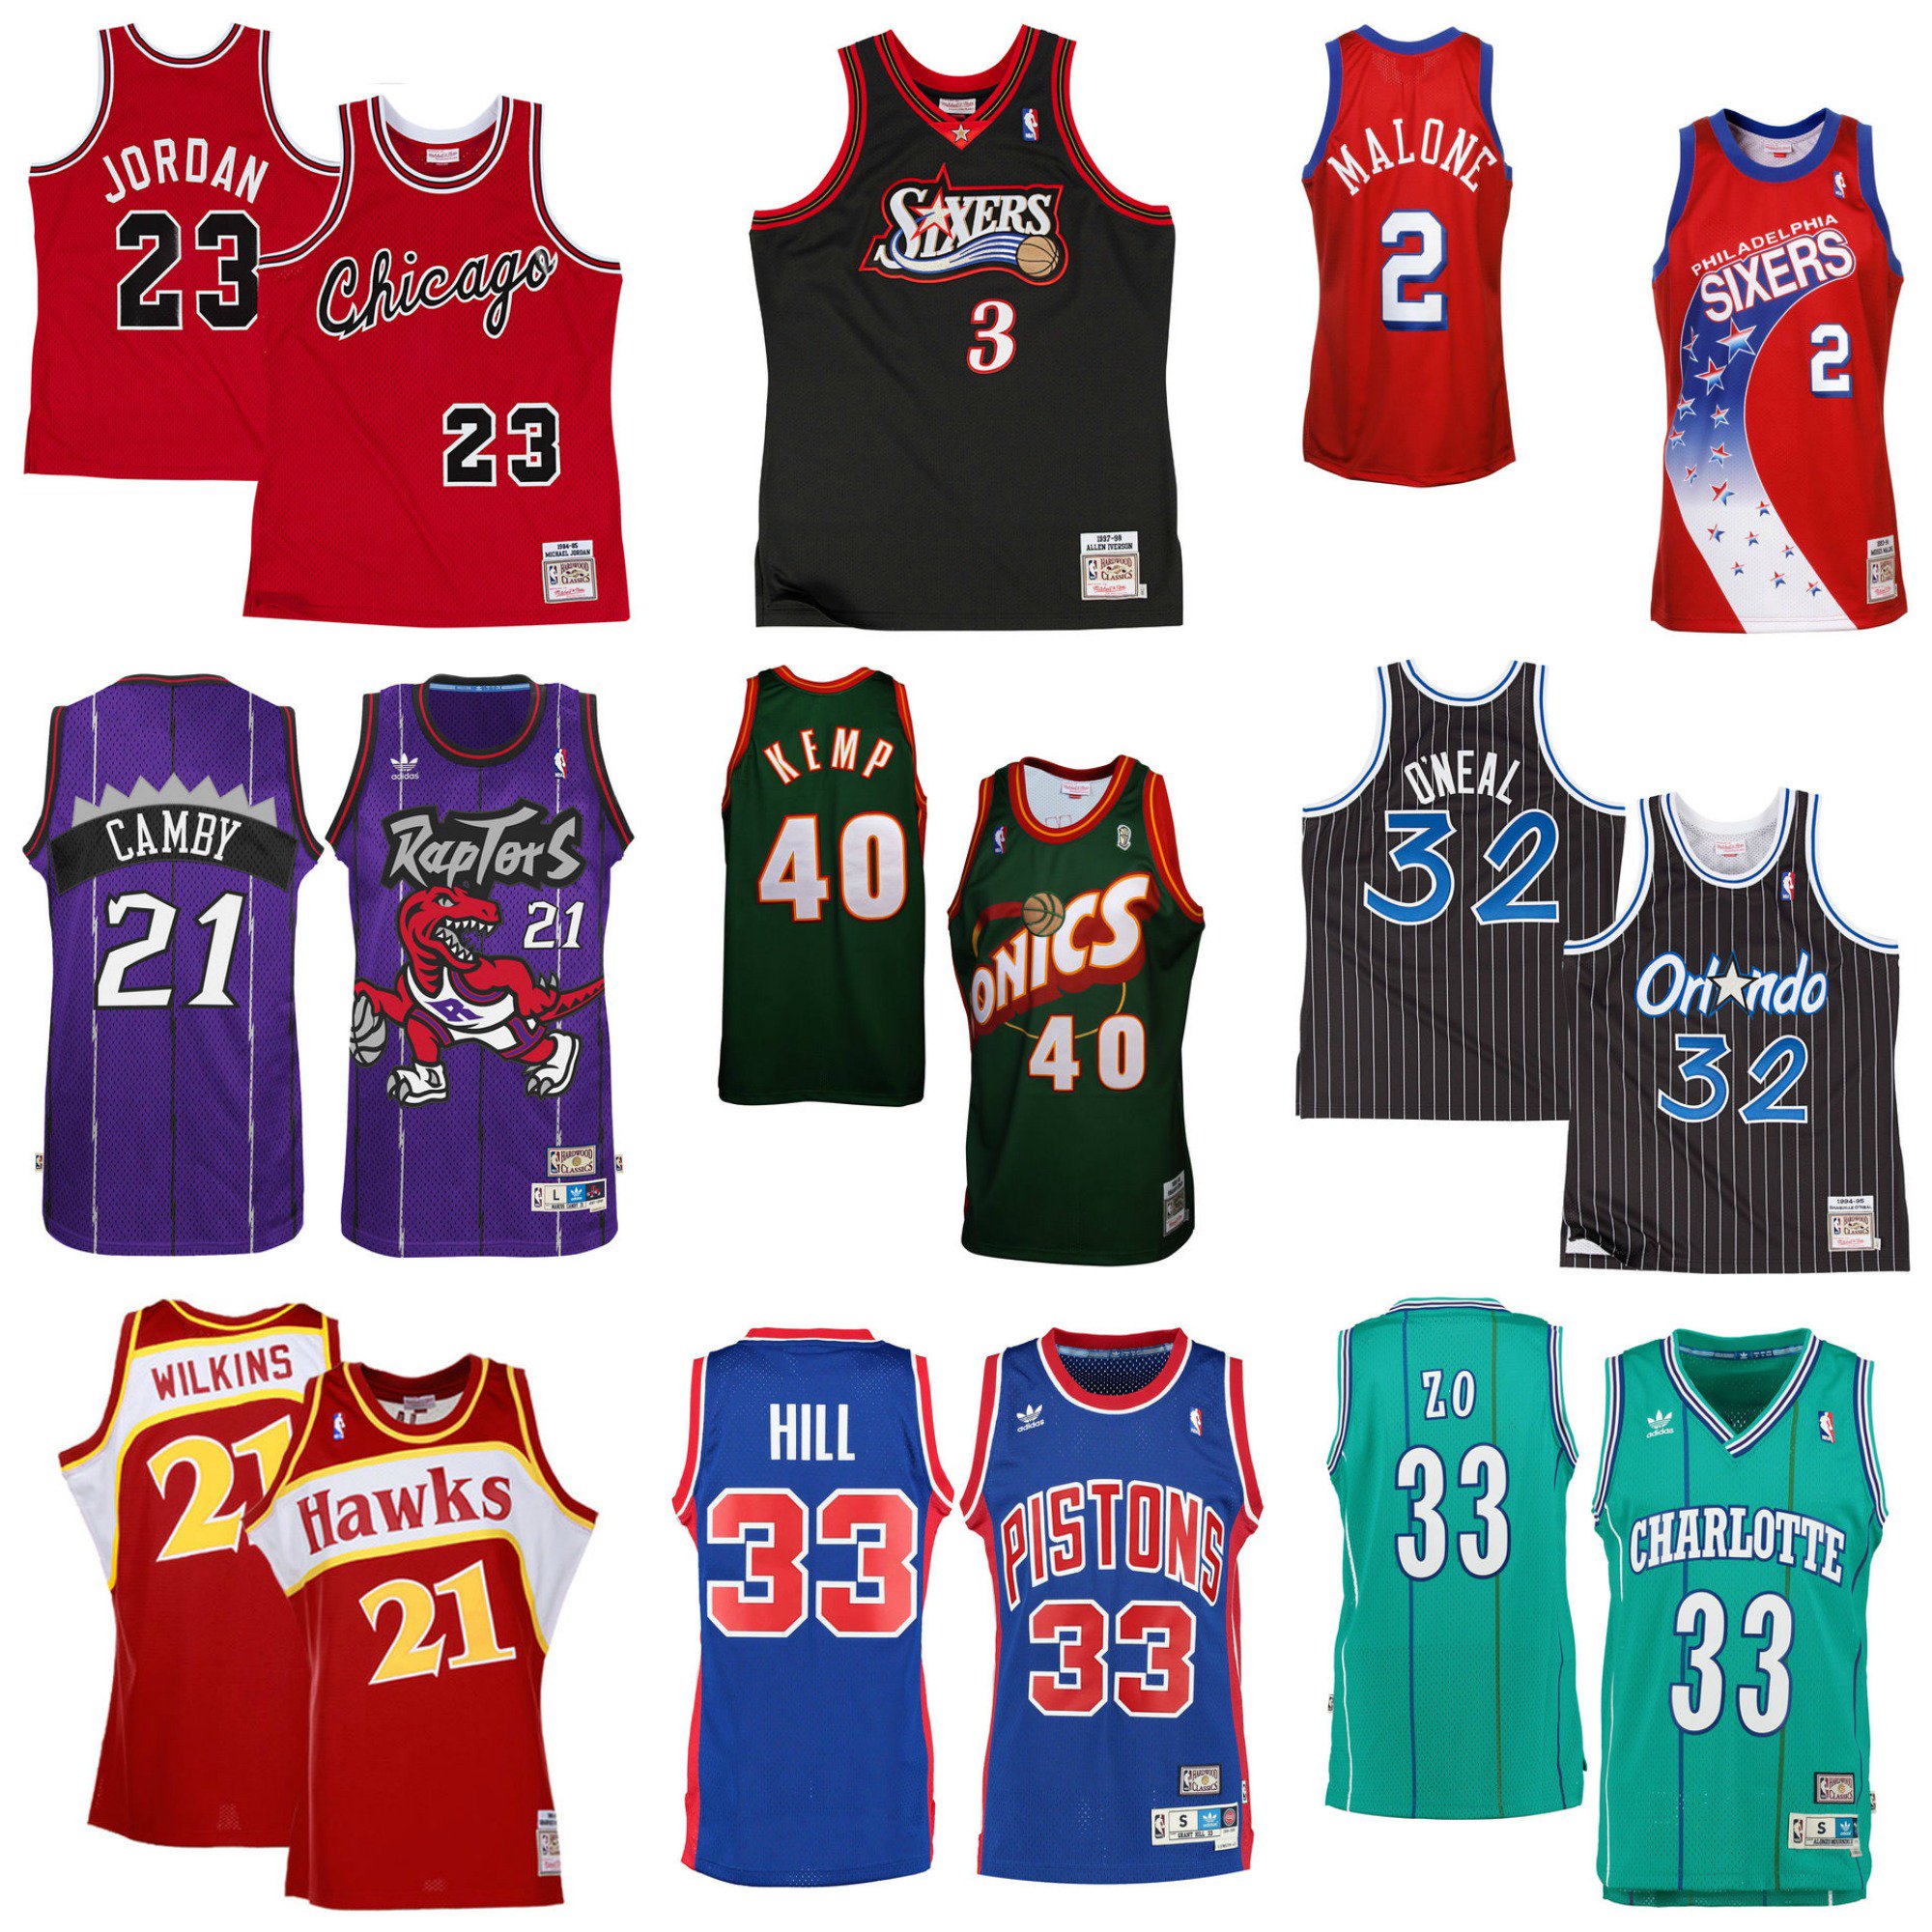 NBA Throwback Jerseys, NBA Retro & Vintage Throwback Uniforms